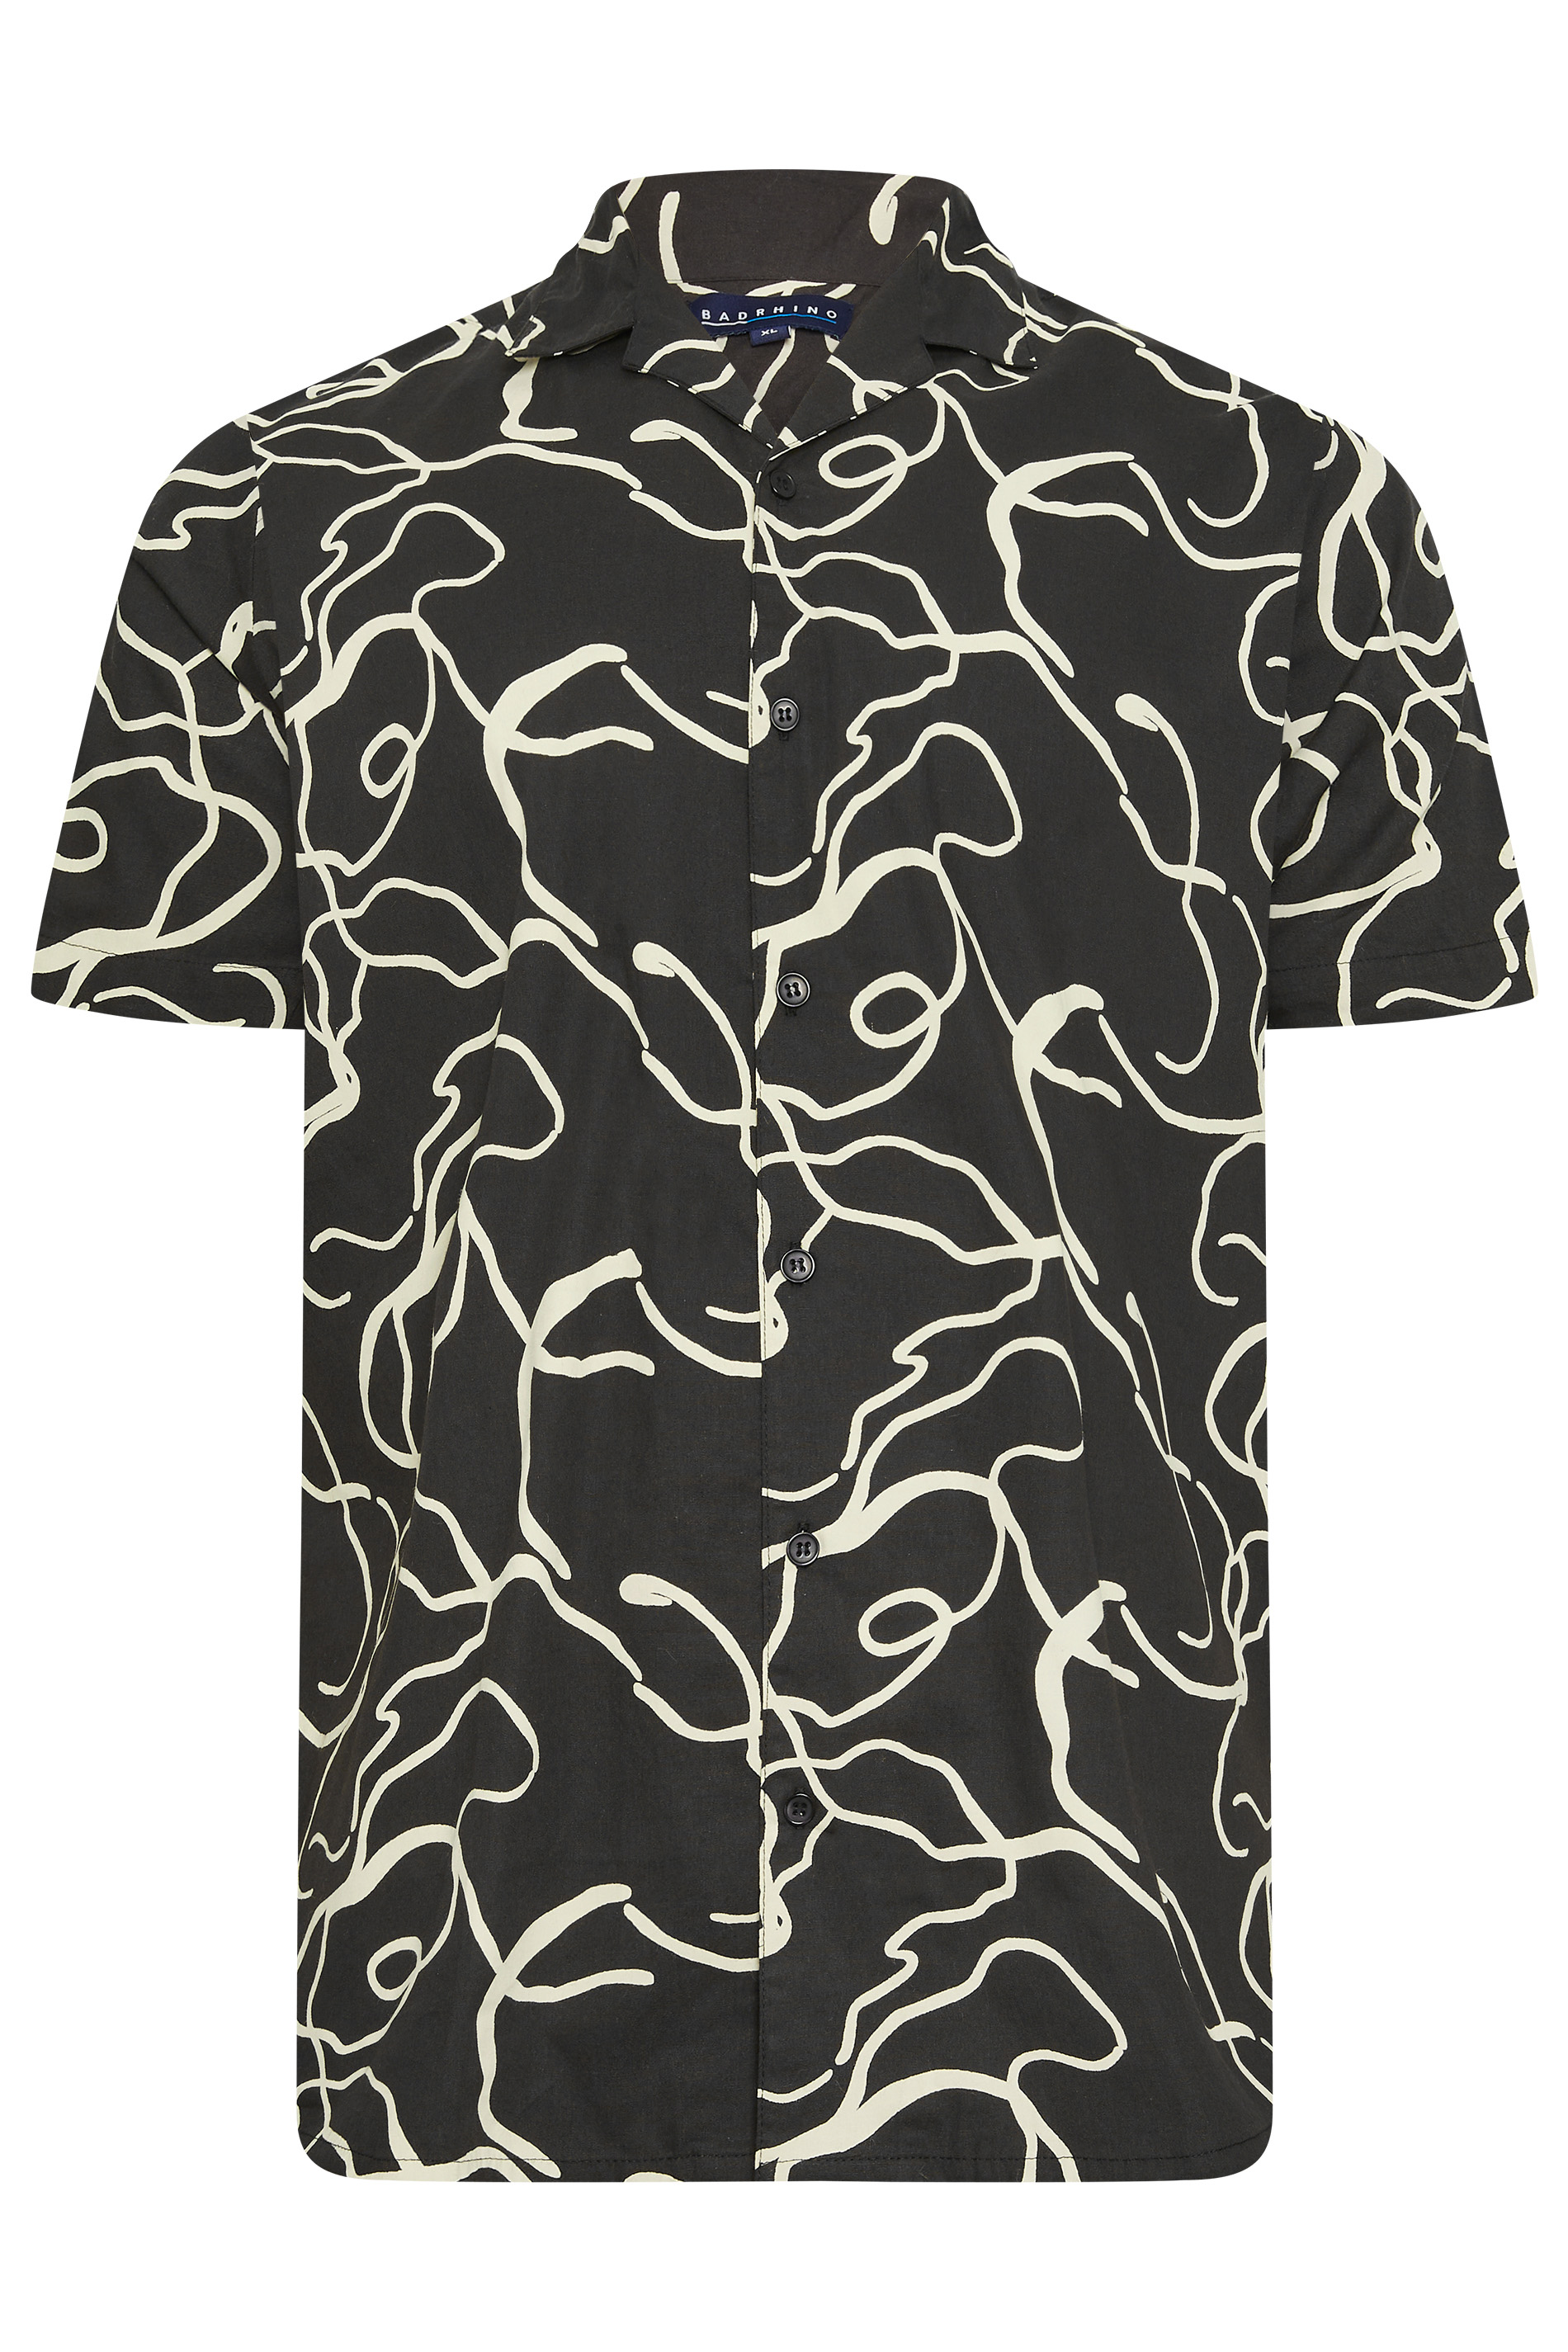 BadRhino Big & Tall Black Abstract Print Short Sleeve Shirt | BadRhino 3